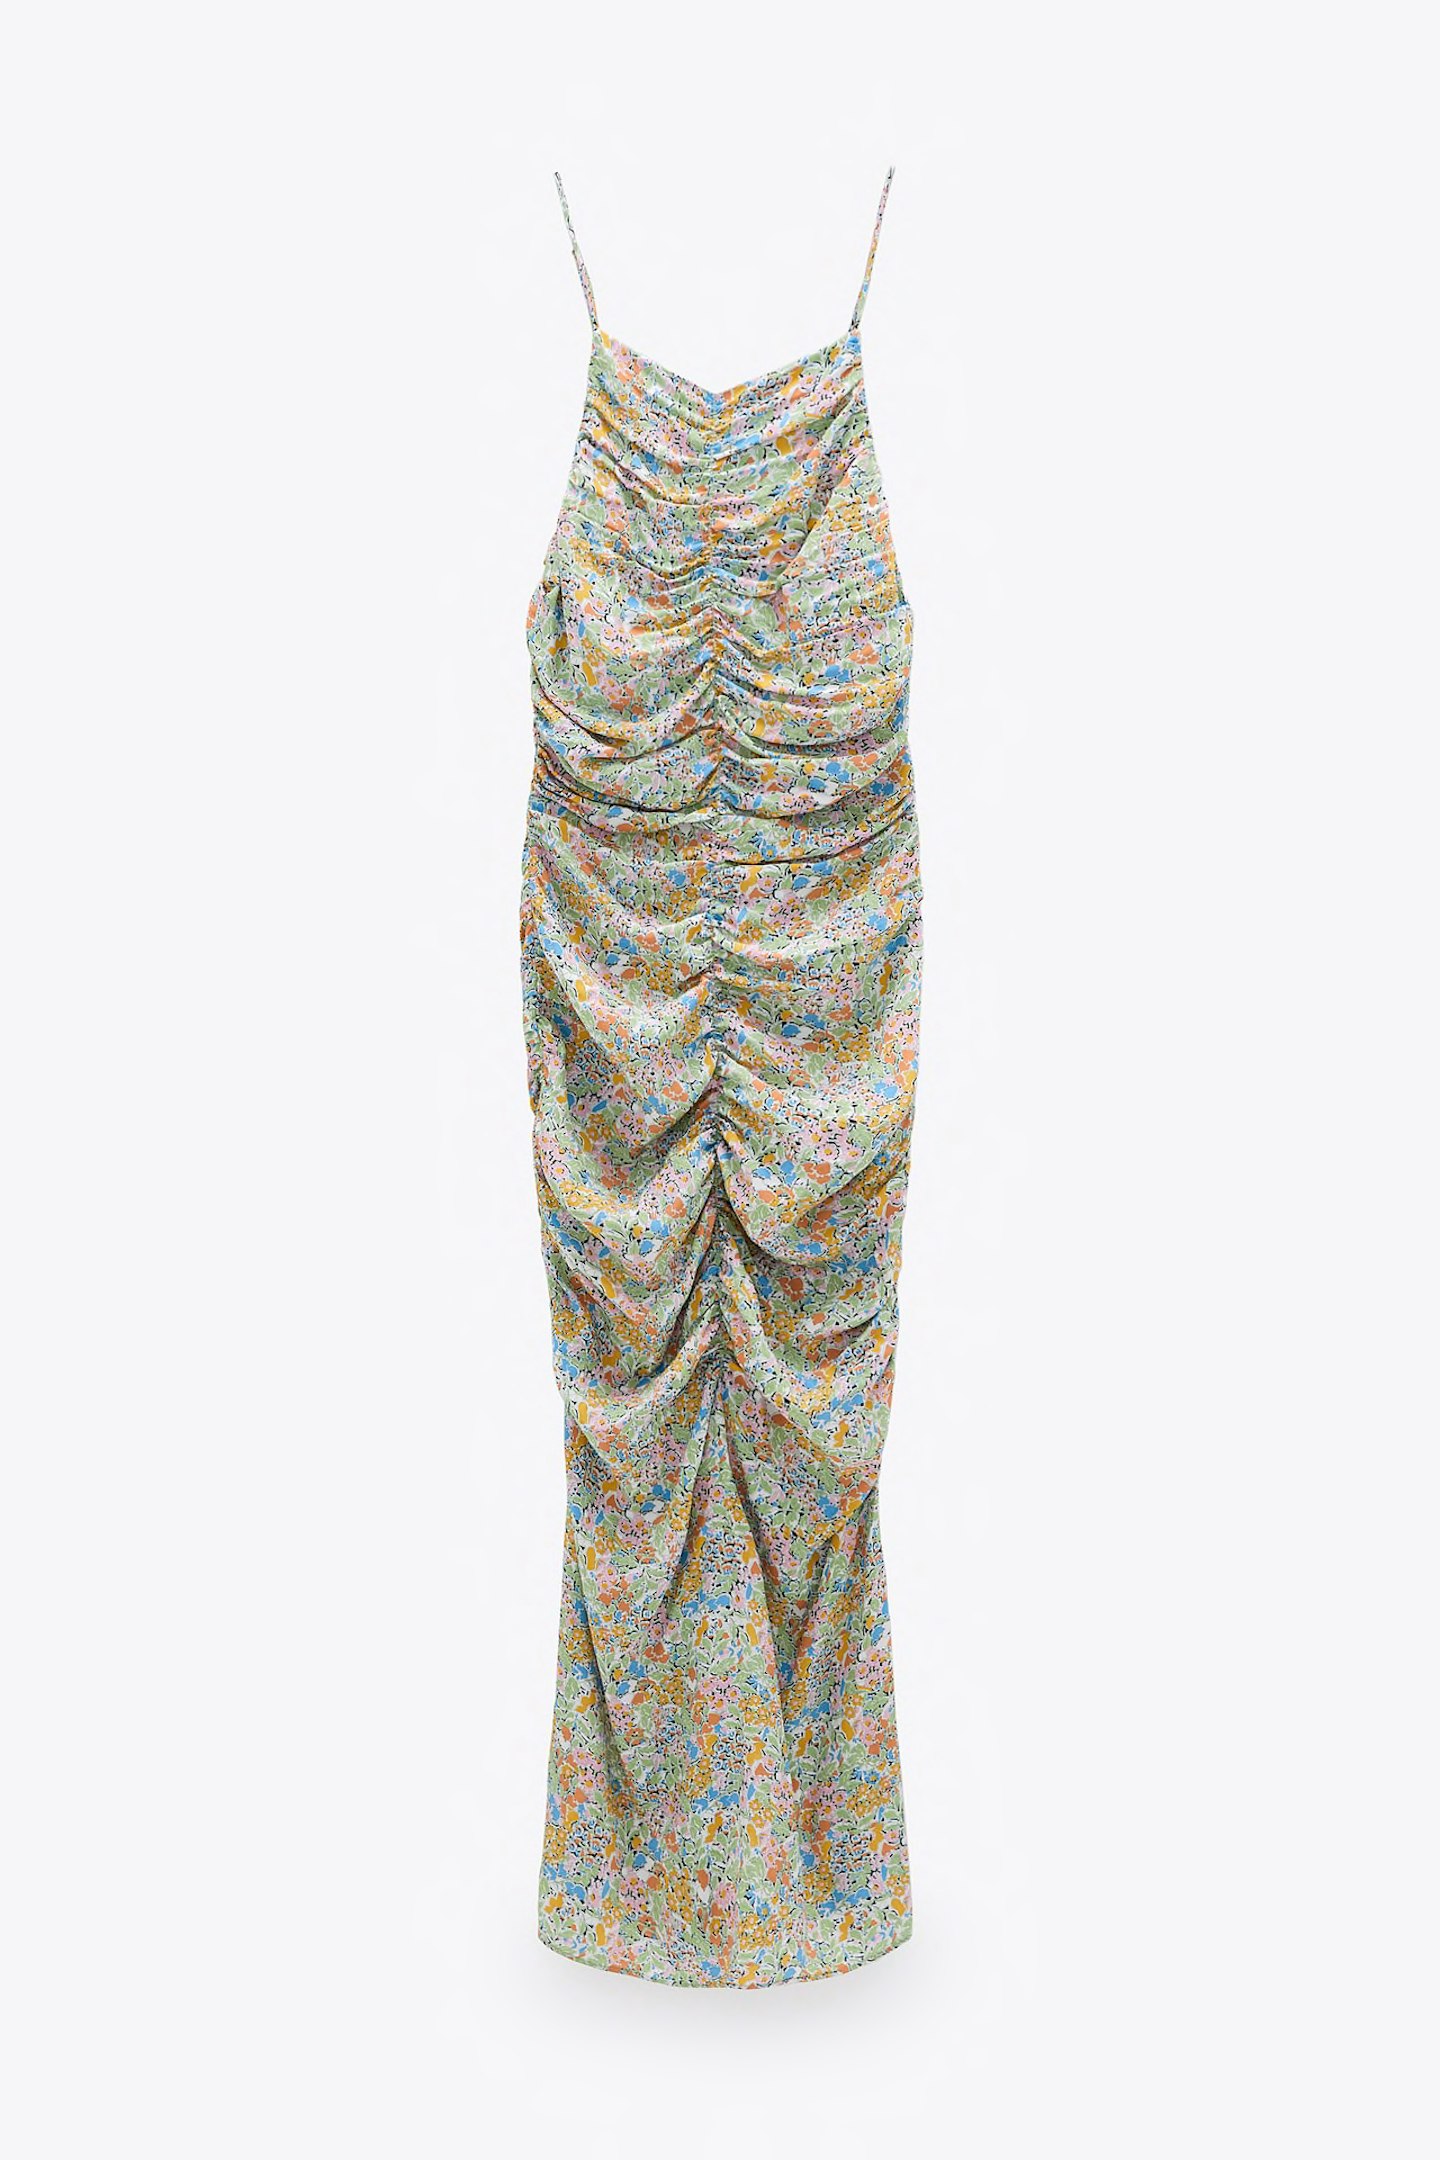 Zara, Printed Draped Dress, £29.99